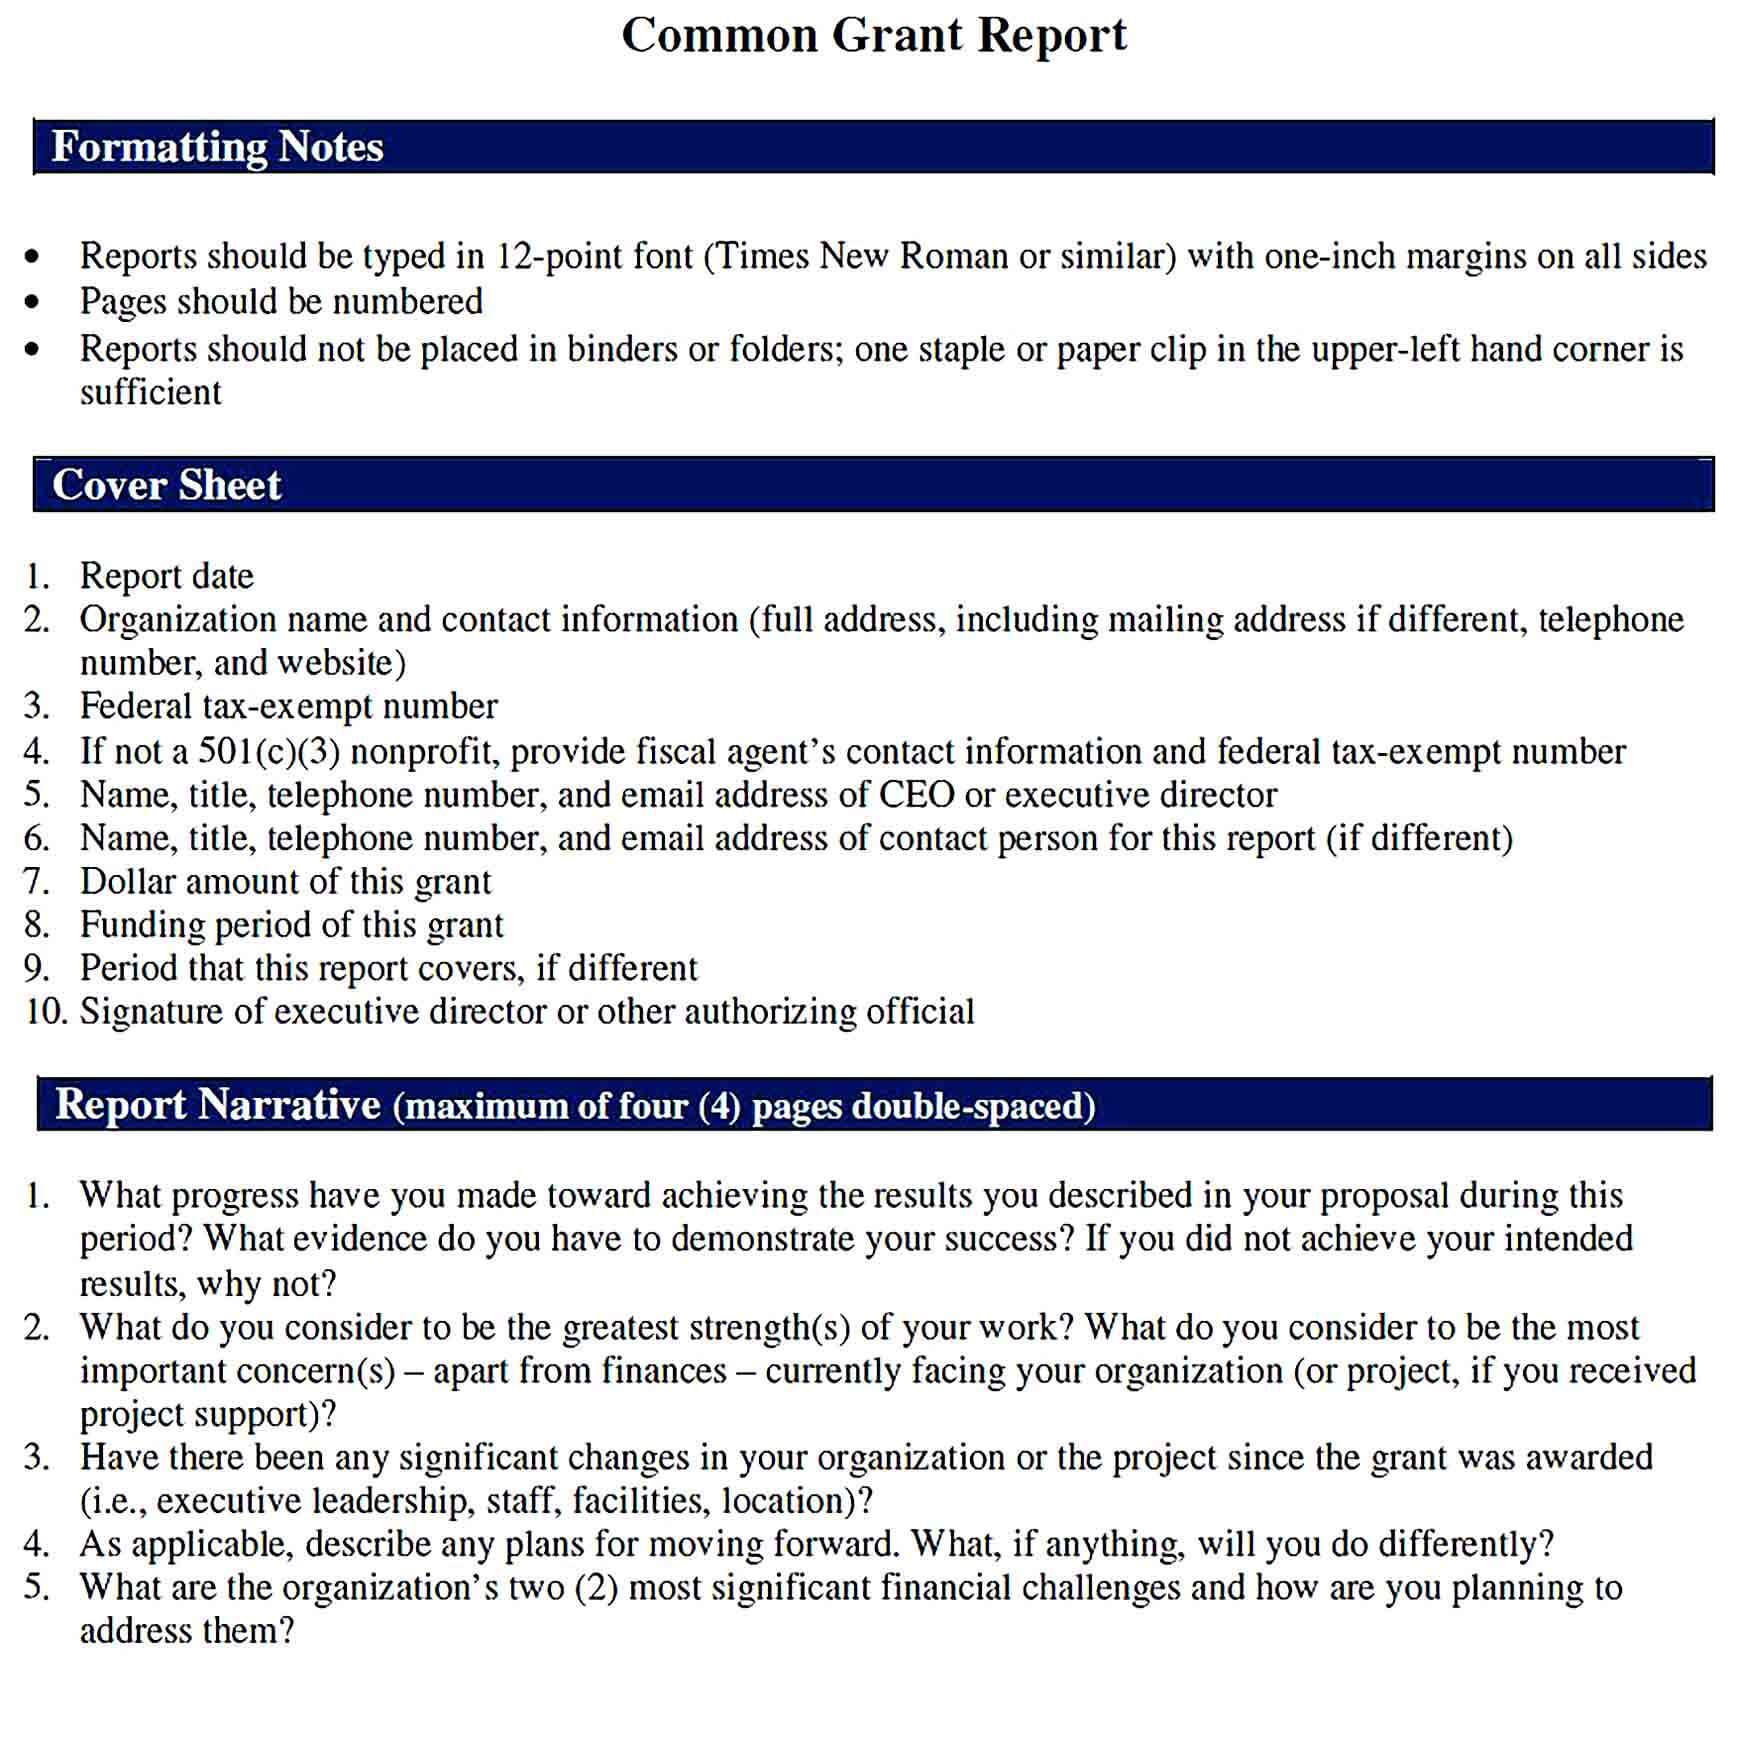 Sample Common Grant Report Template